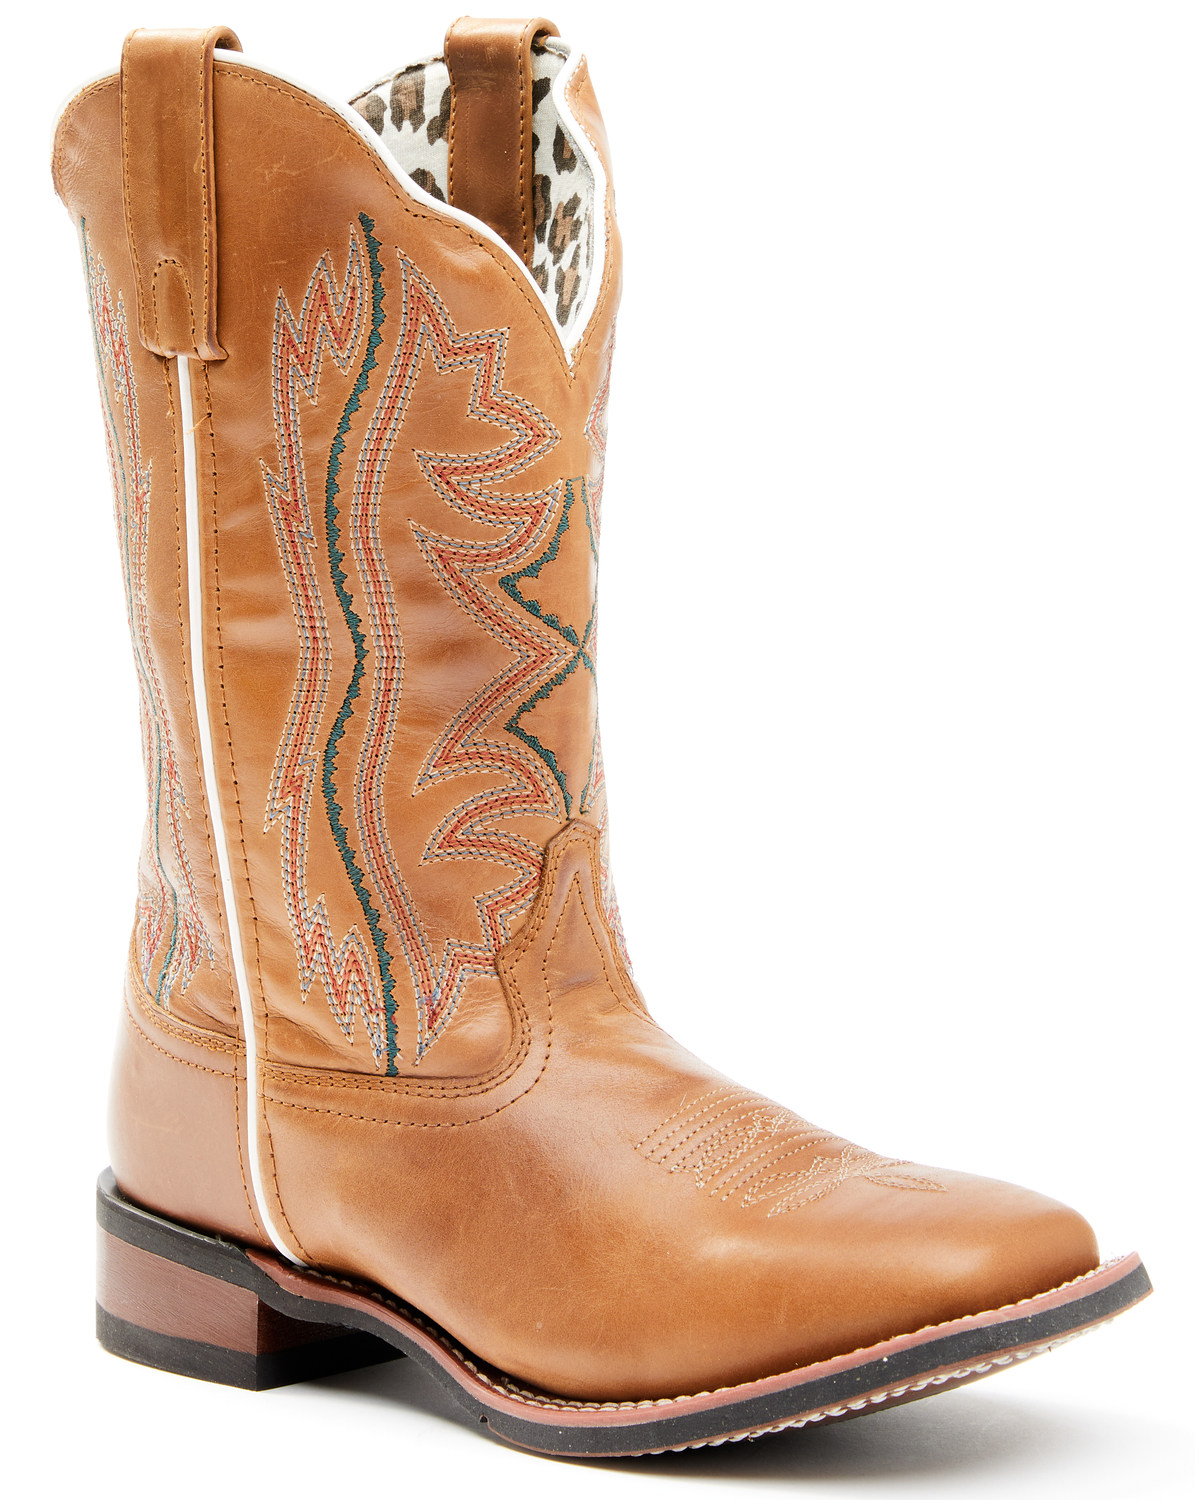 Laredo Women's Lad Tan Western Boots - Broad Square Toe